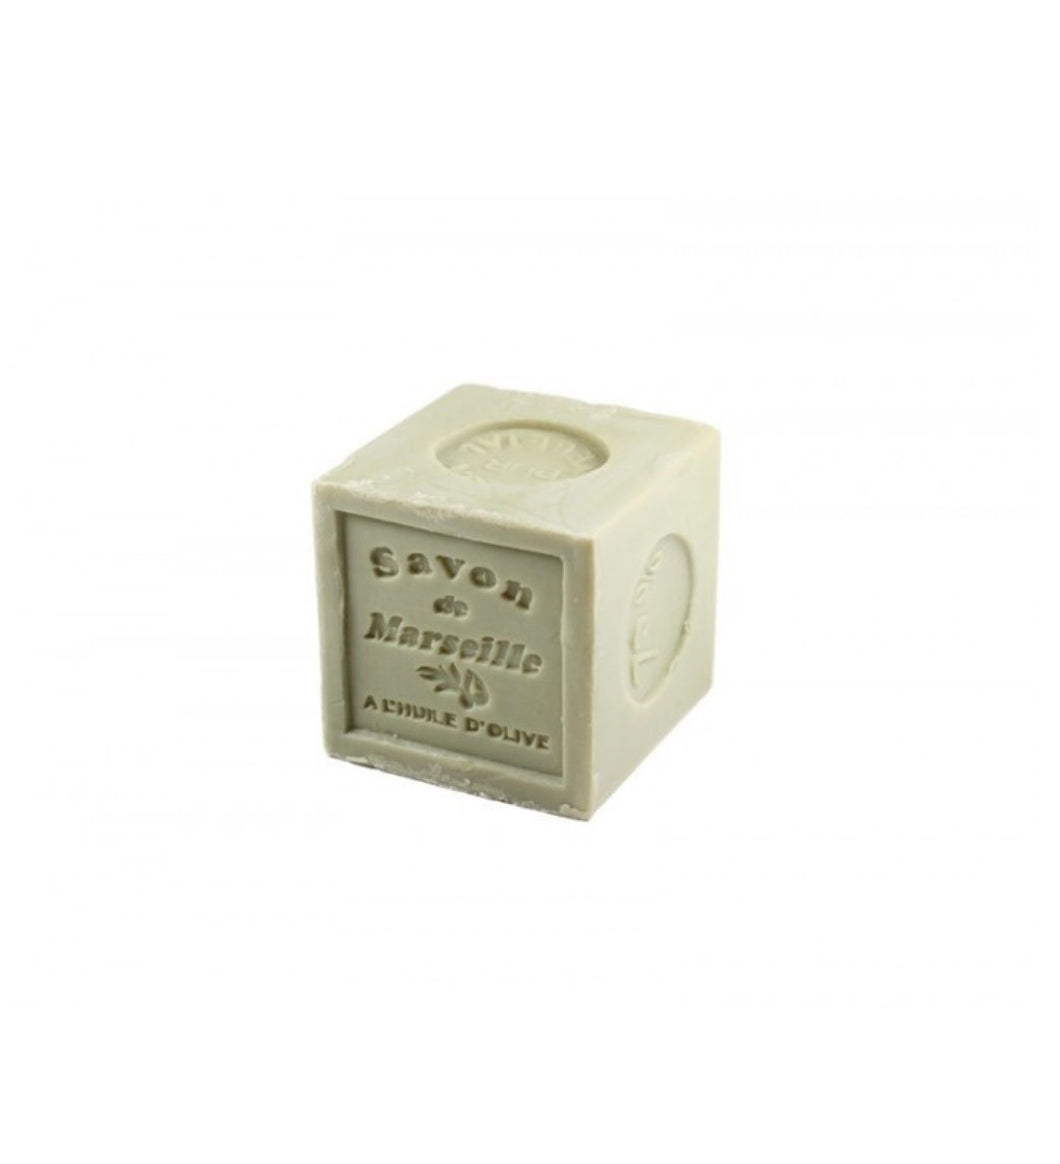 Traditional Savon De Marseille Soap Cube Uses